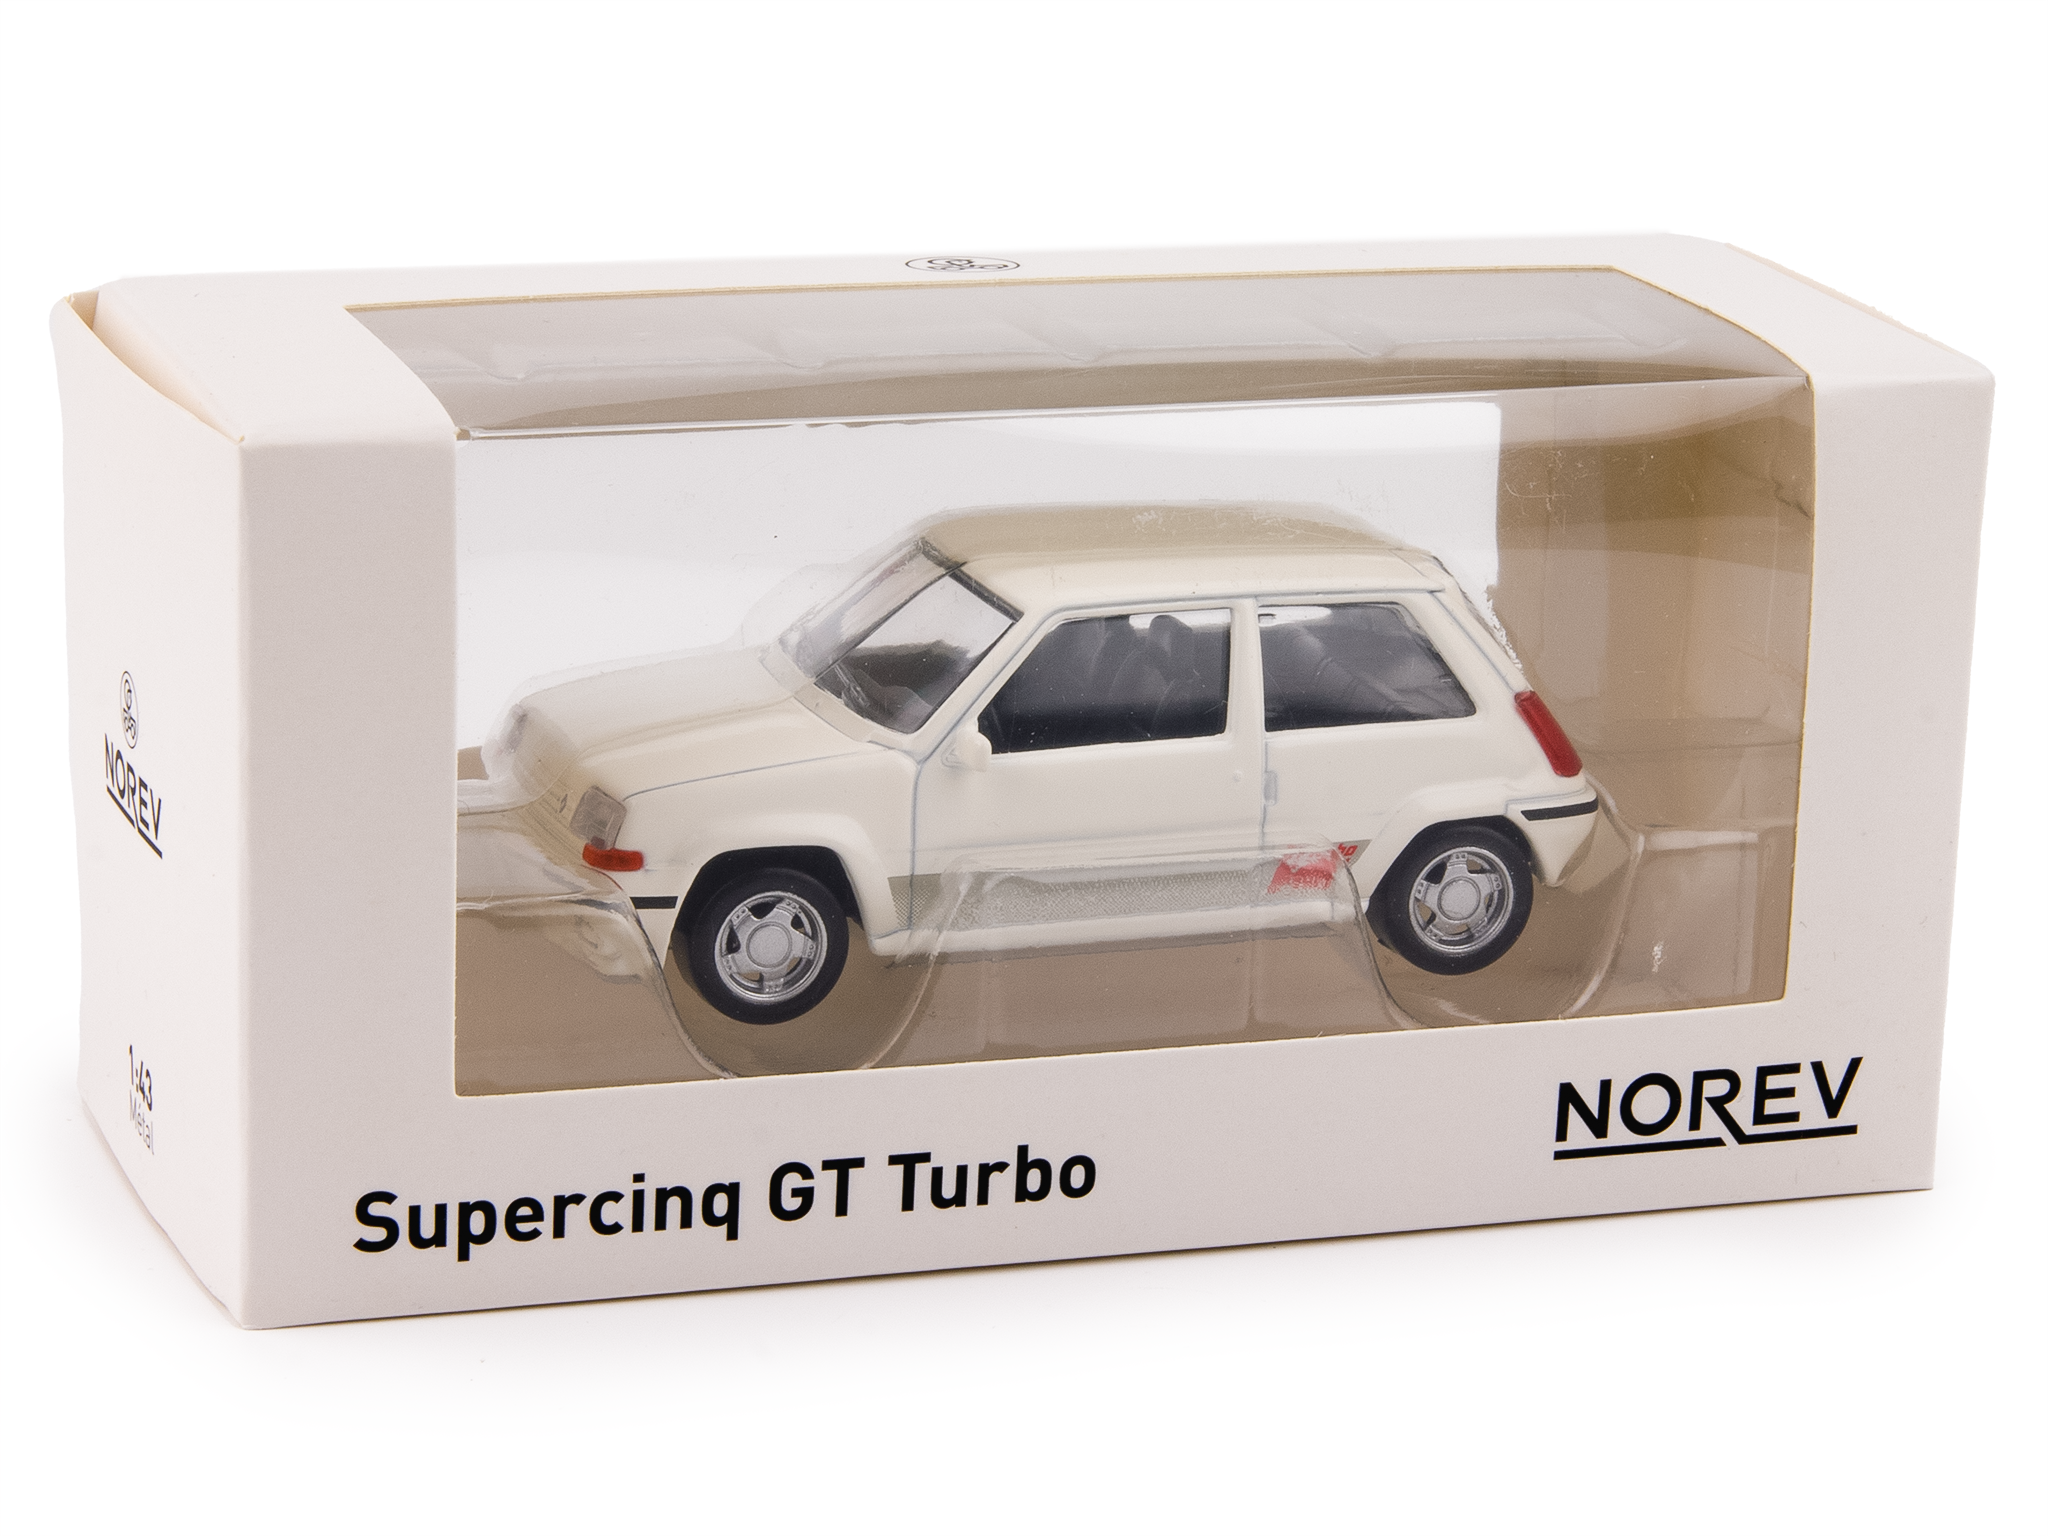 Renault SuperCinq GT Turbo Ph.2 1988 white - 1:43 Scale Diecast Model Car